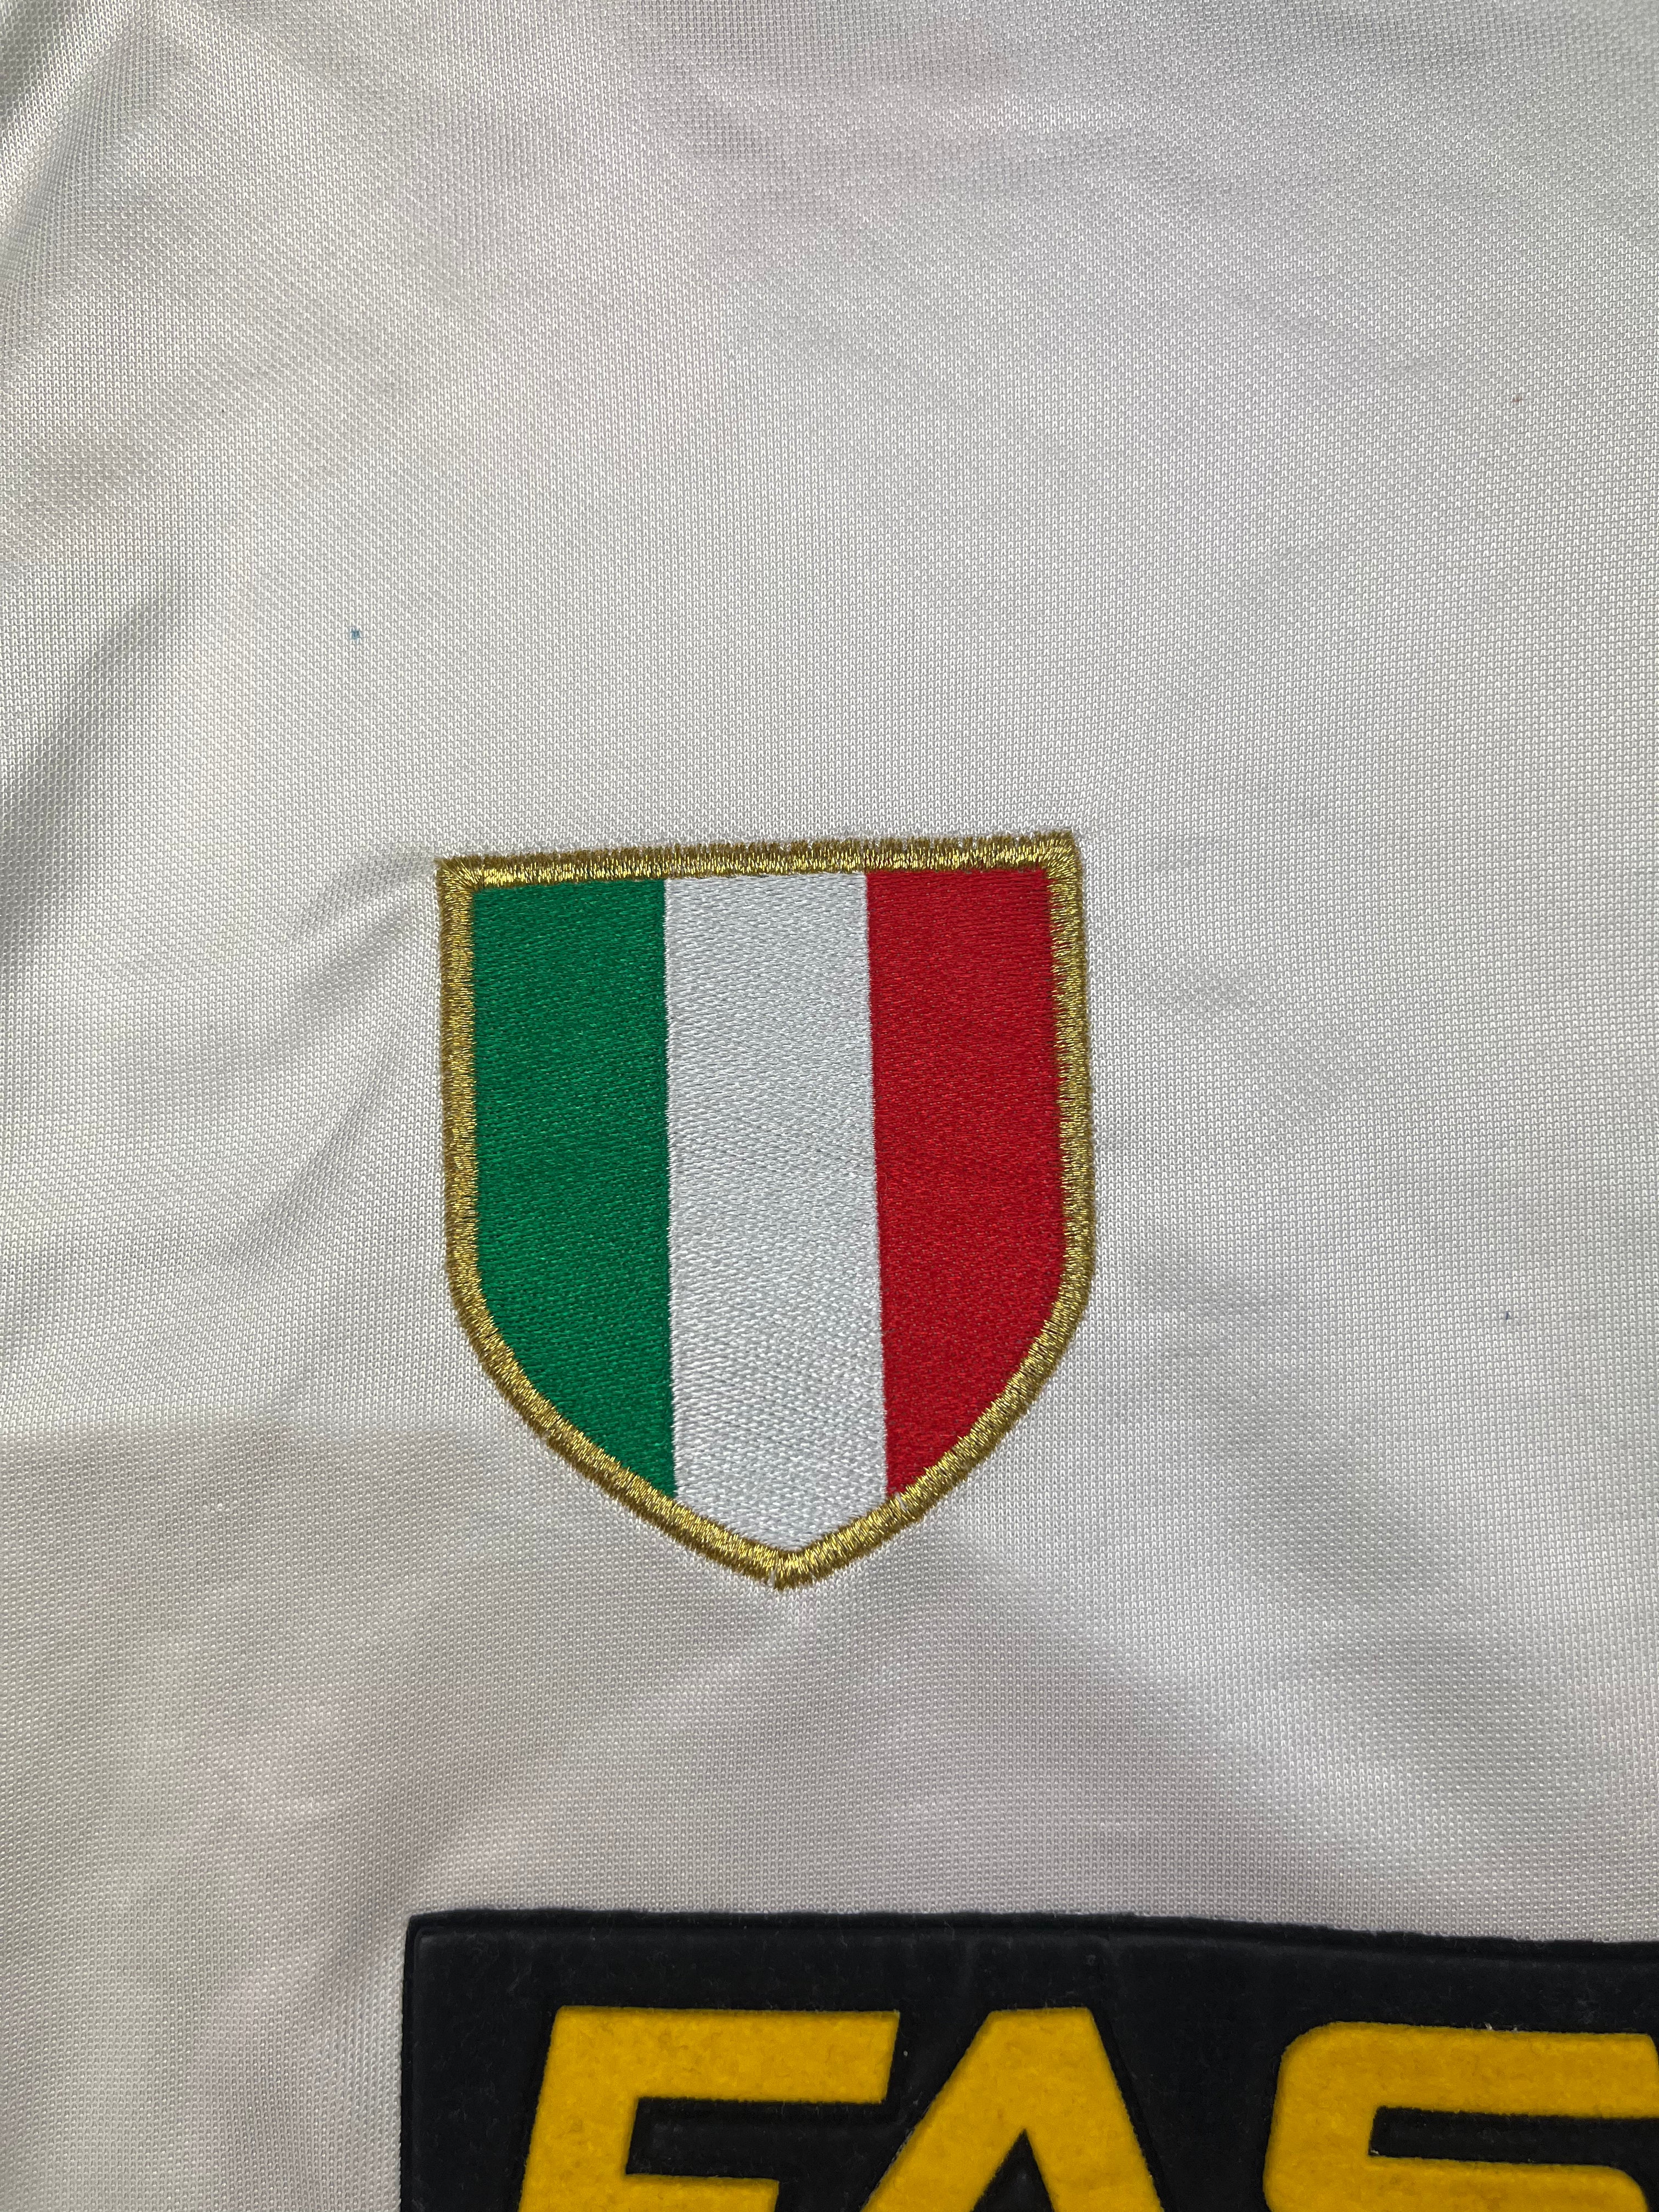 2002/03 Camiseta visitante de la Juventus (XL) 8/10